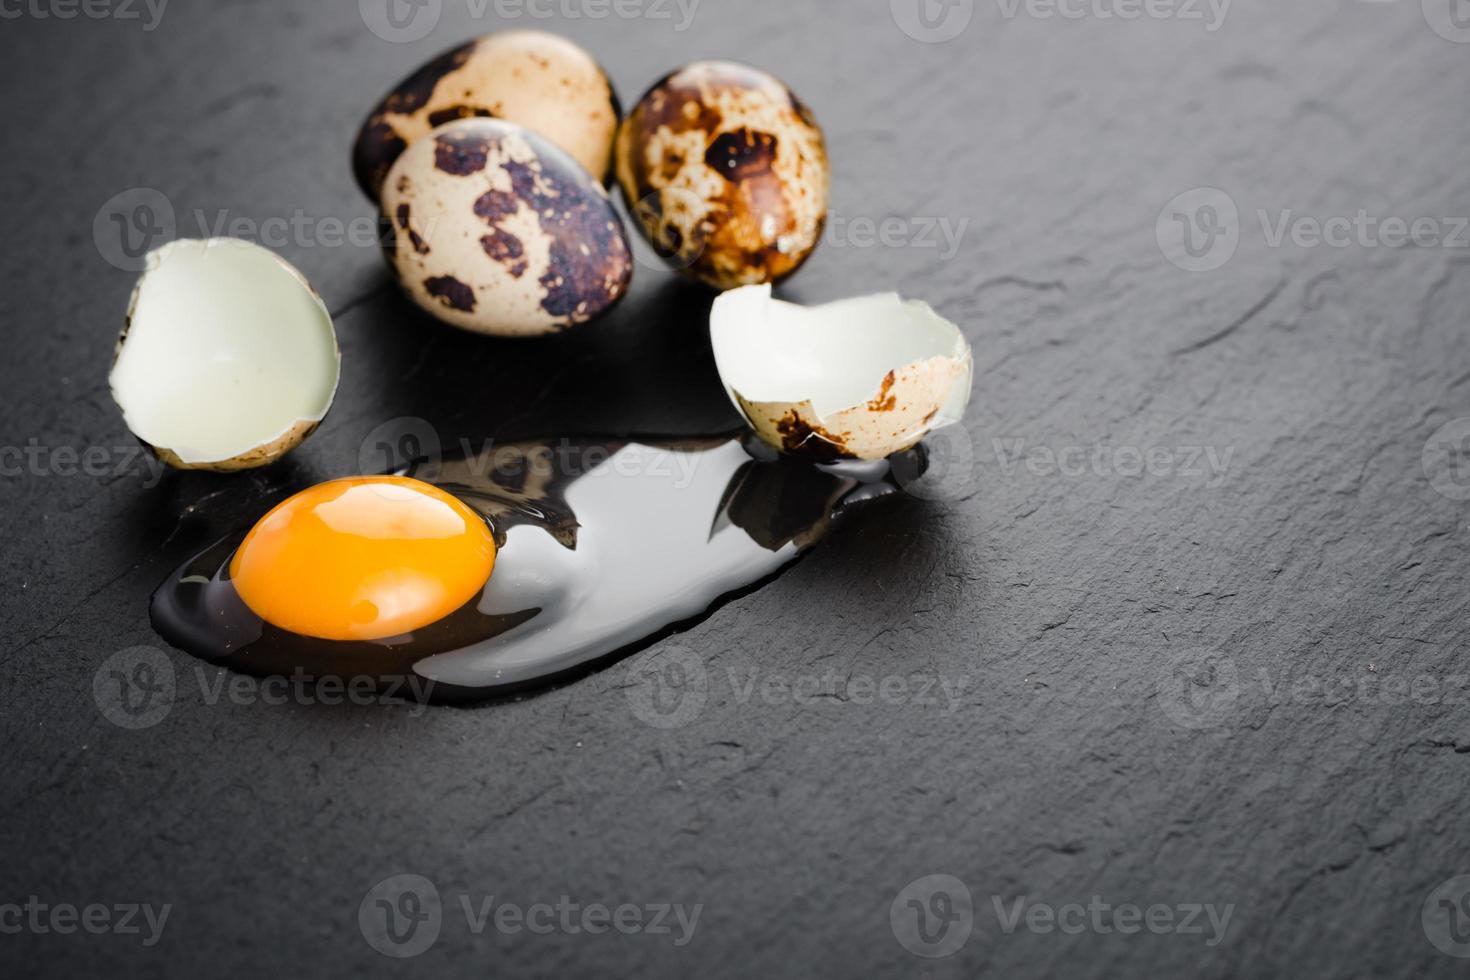 huevos de codorniz sobre fondo de piedra negra, huevo de codorniz roto, agrietado, yema de huevo de codorniz. Producto organico. foto